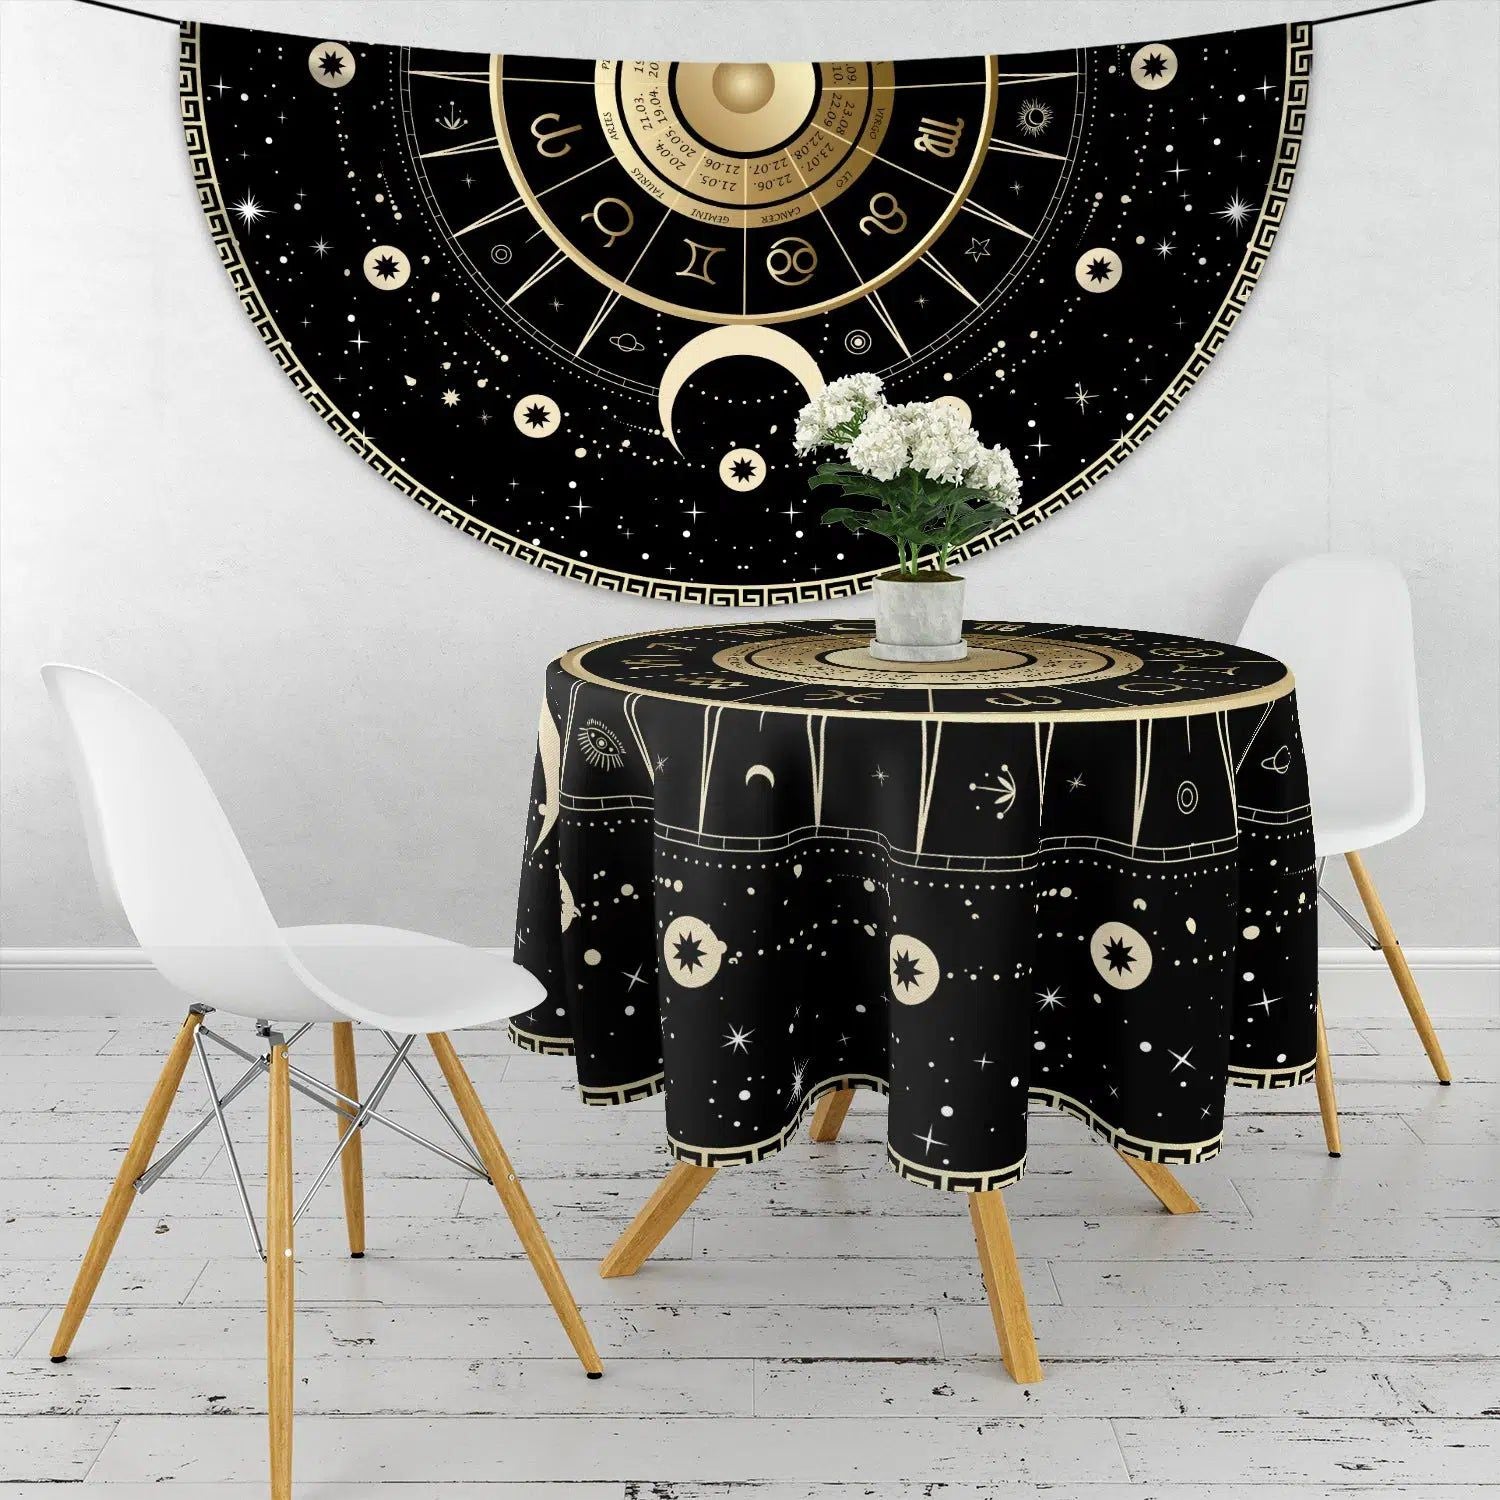 Tarot Circular Table Cloth Pagan Table Cover-MoonChildWorld